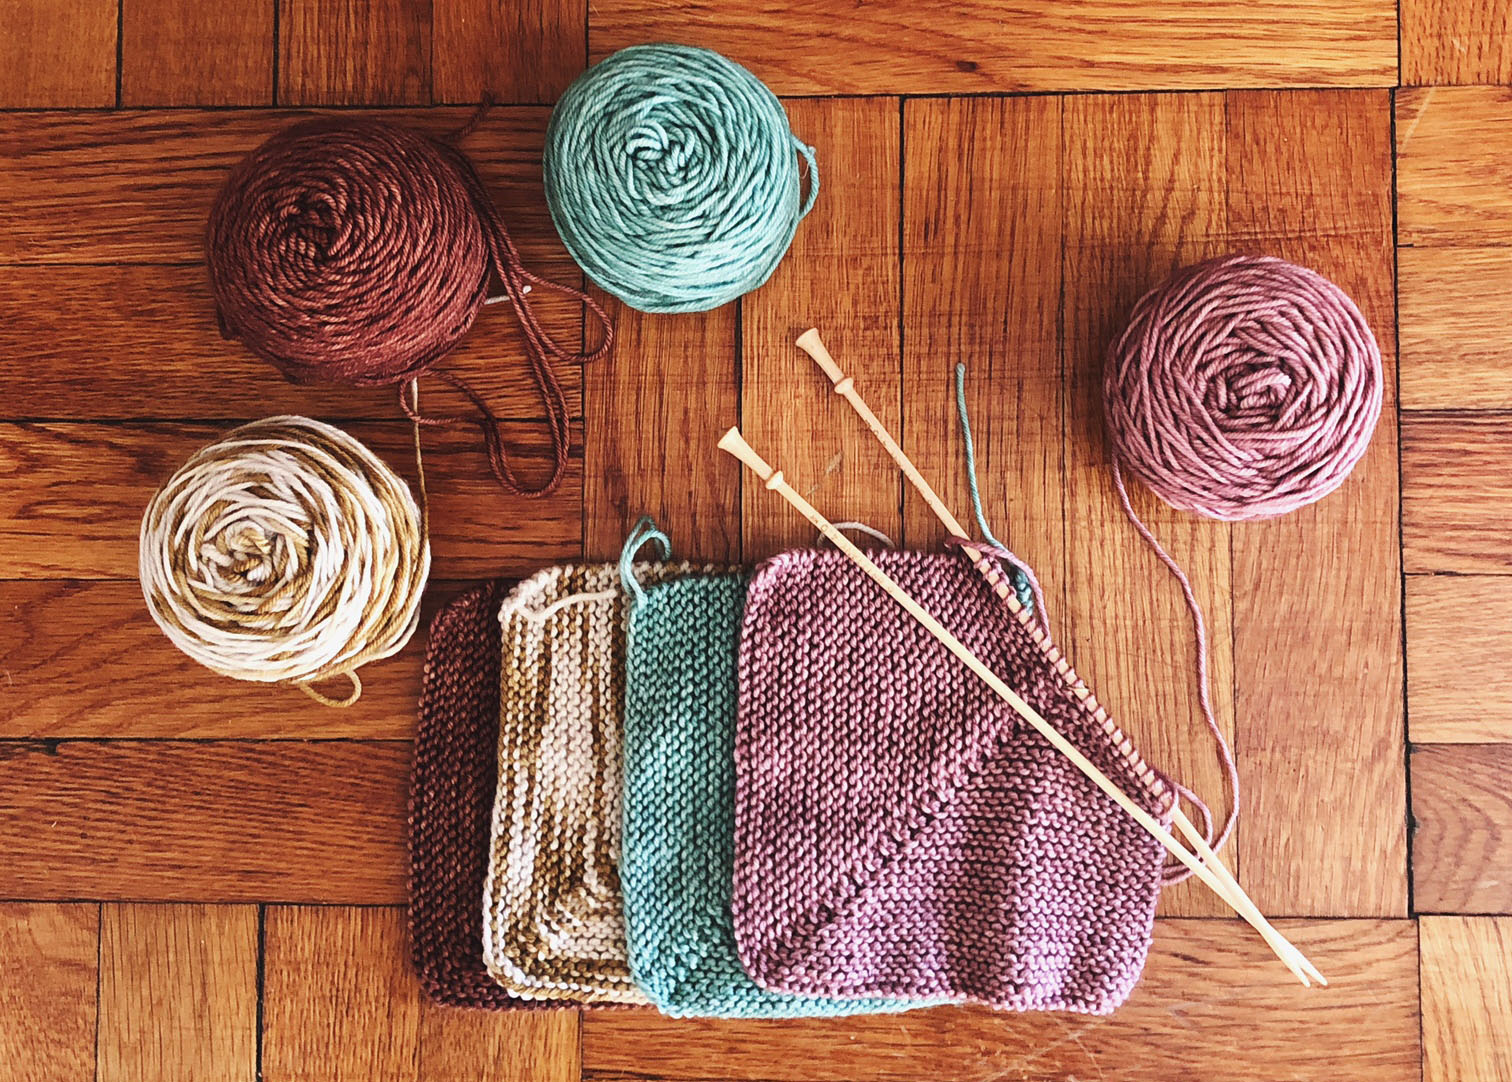 Knitting Notions